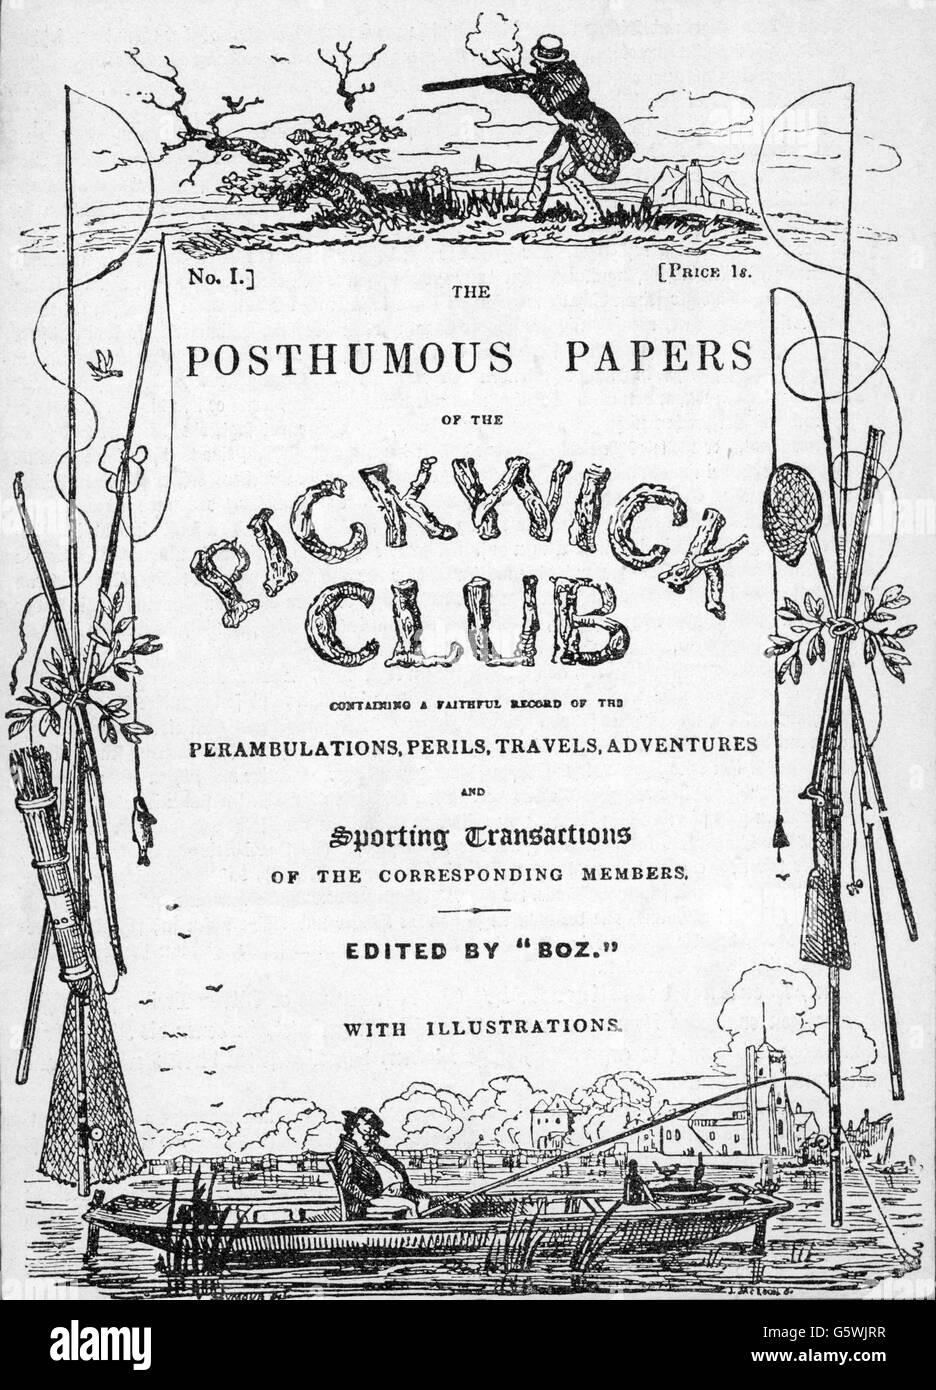 Dickens, Charles, 7.2.1812 - 9.7.1870, englischer Autor/Schriftsteller, Werke, "The Posthumous Papers of the Pickwick Club", Titelseite, erste Ausgabe, Chapman & Hall, London, 1837, Stockfoto